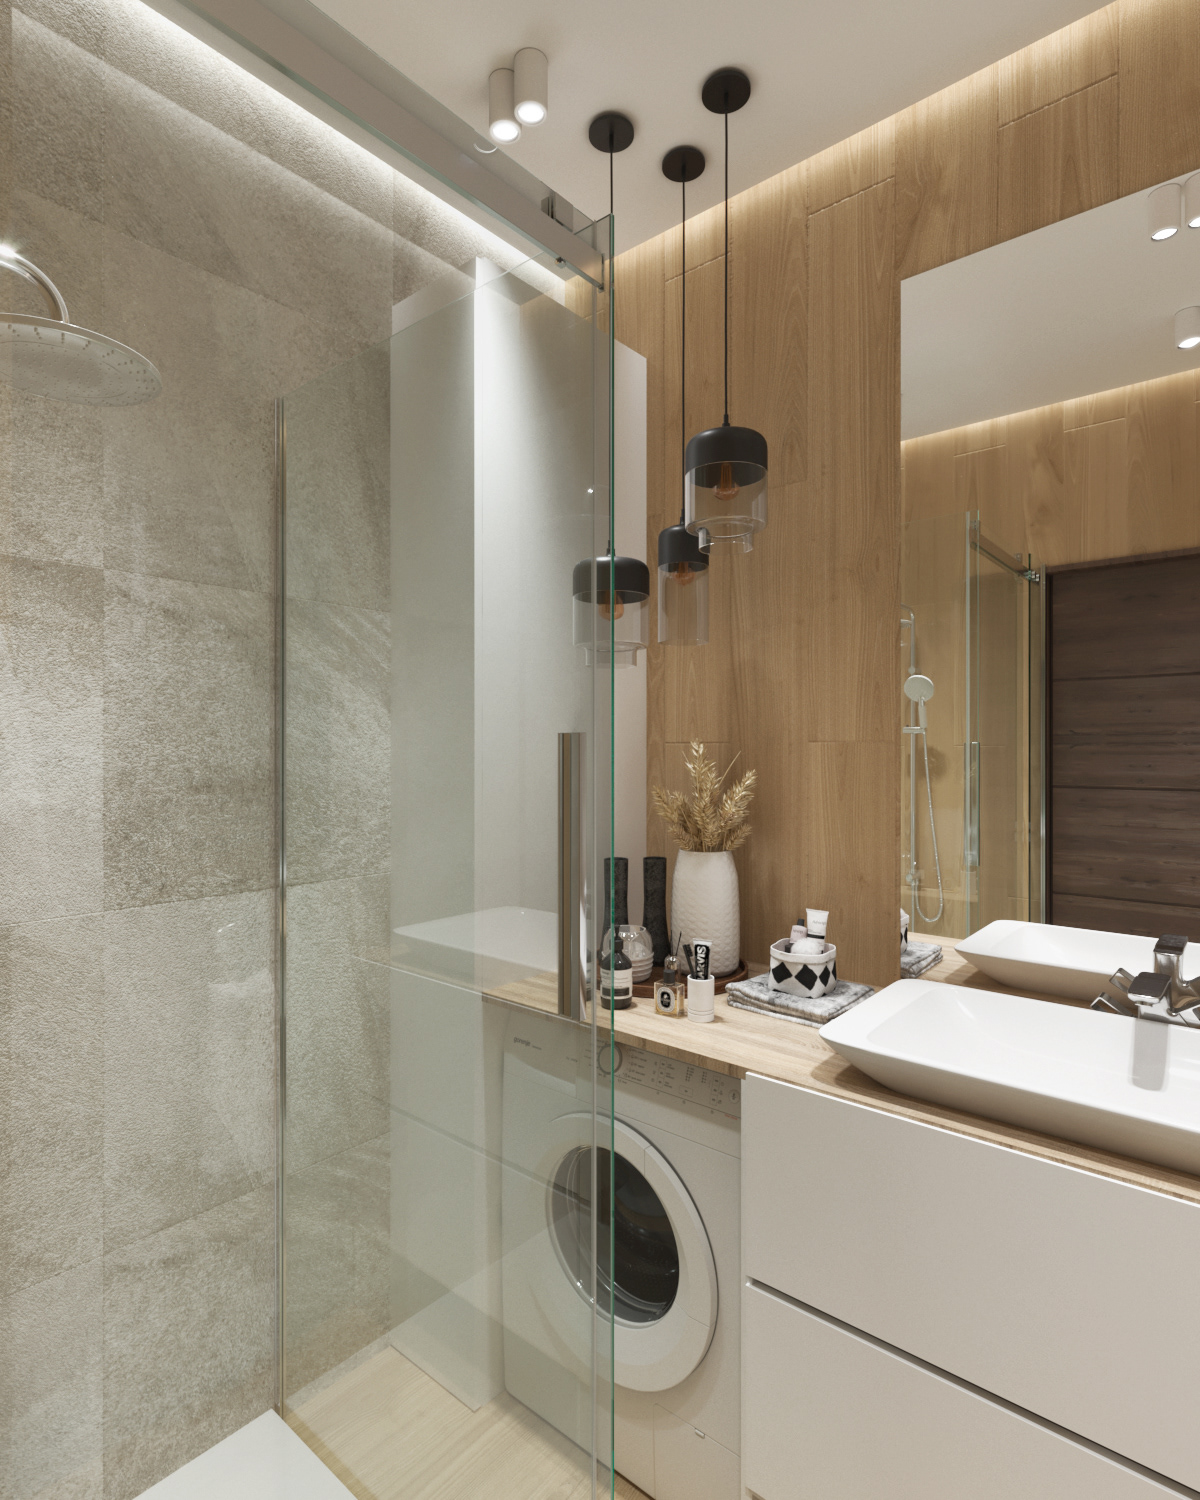 3D 3ds max bathroom corona renderer design Interior kitchen Render room visualization